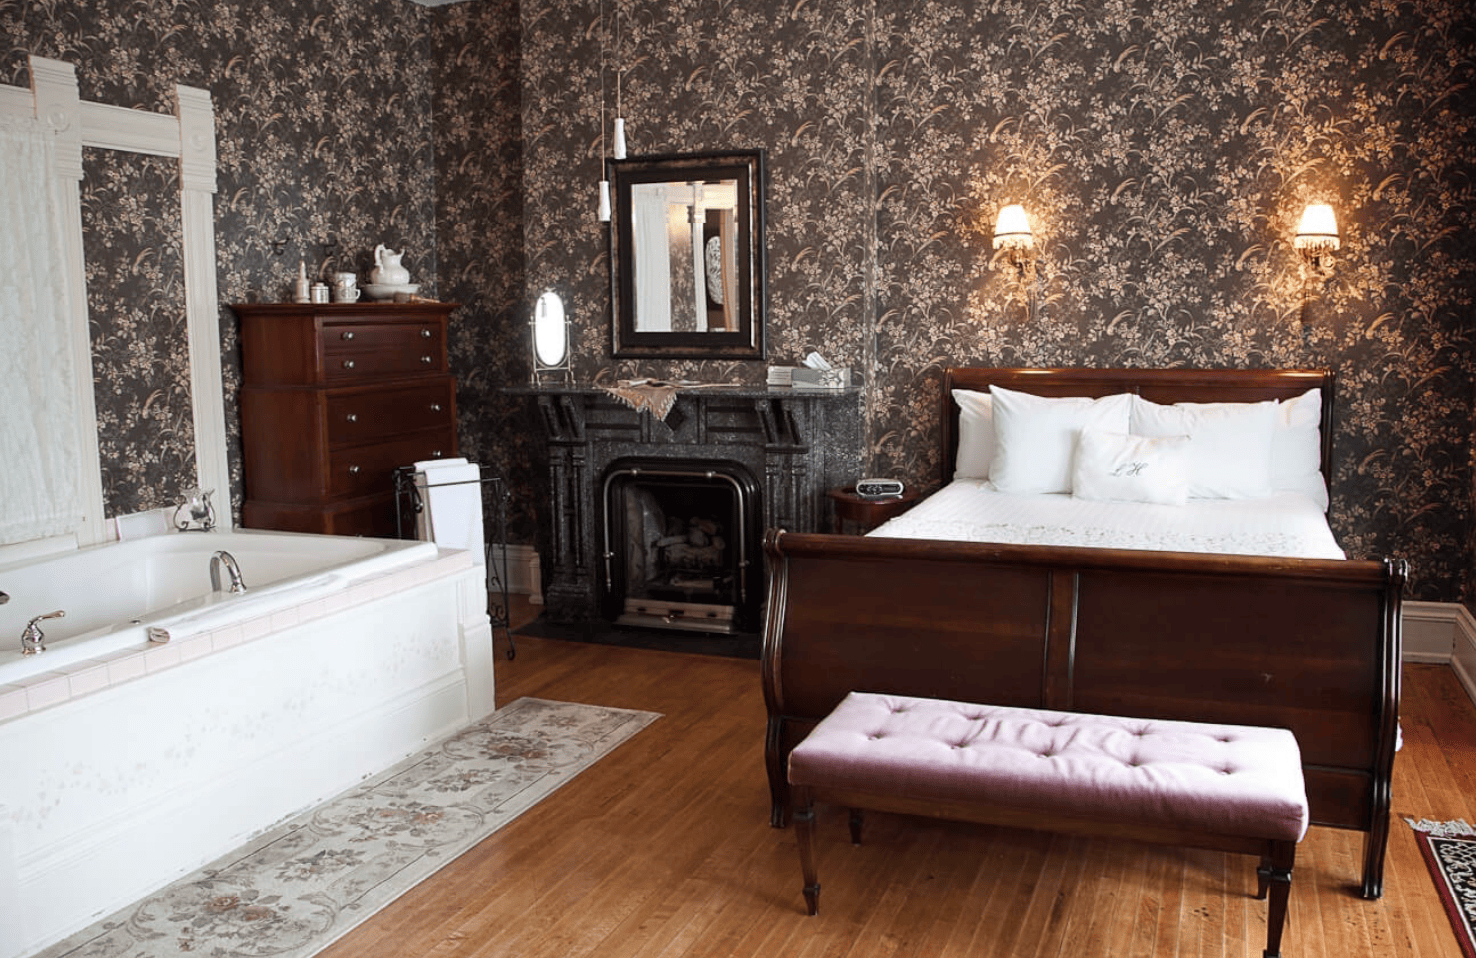 Dark Cherry Sleigh Bed with decorative wallpaper